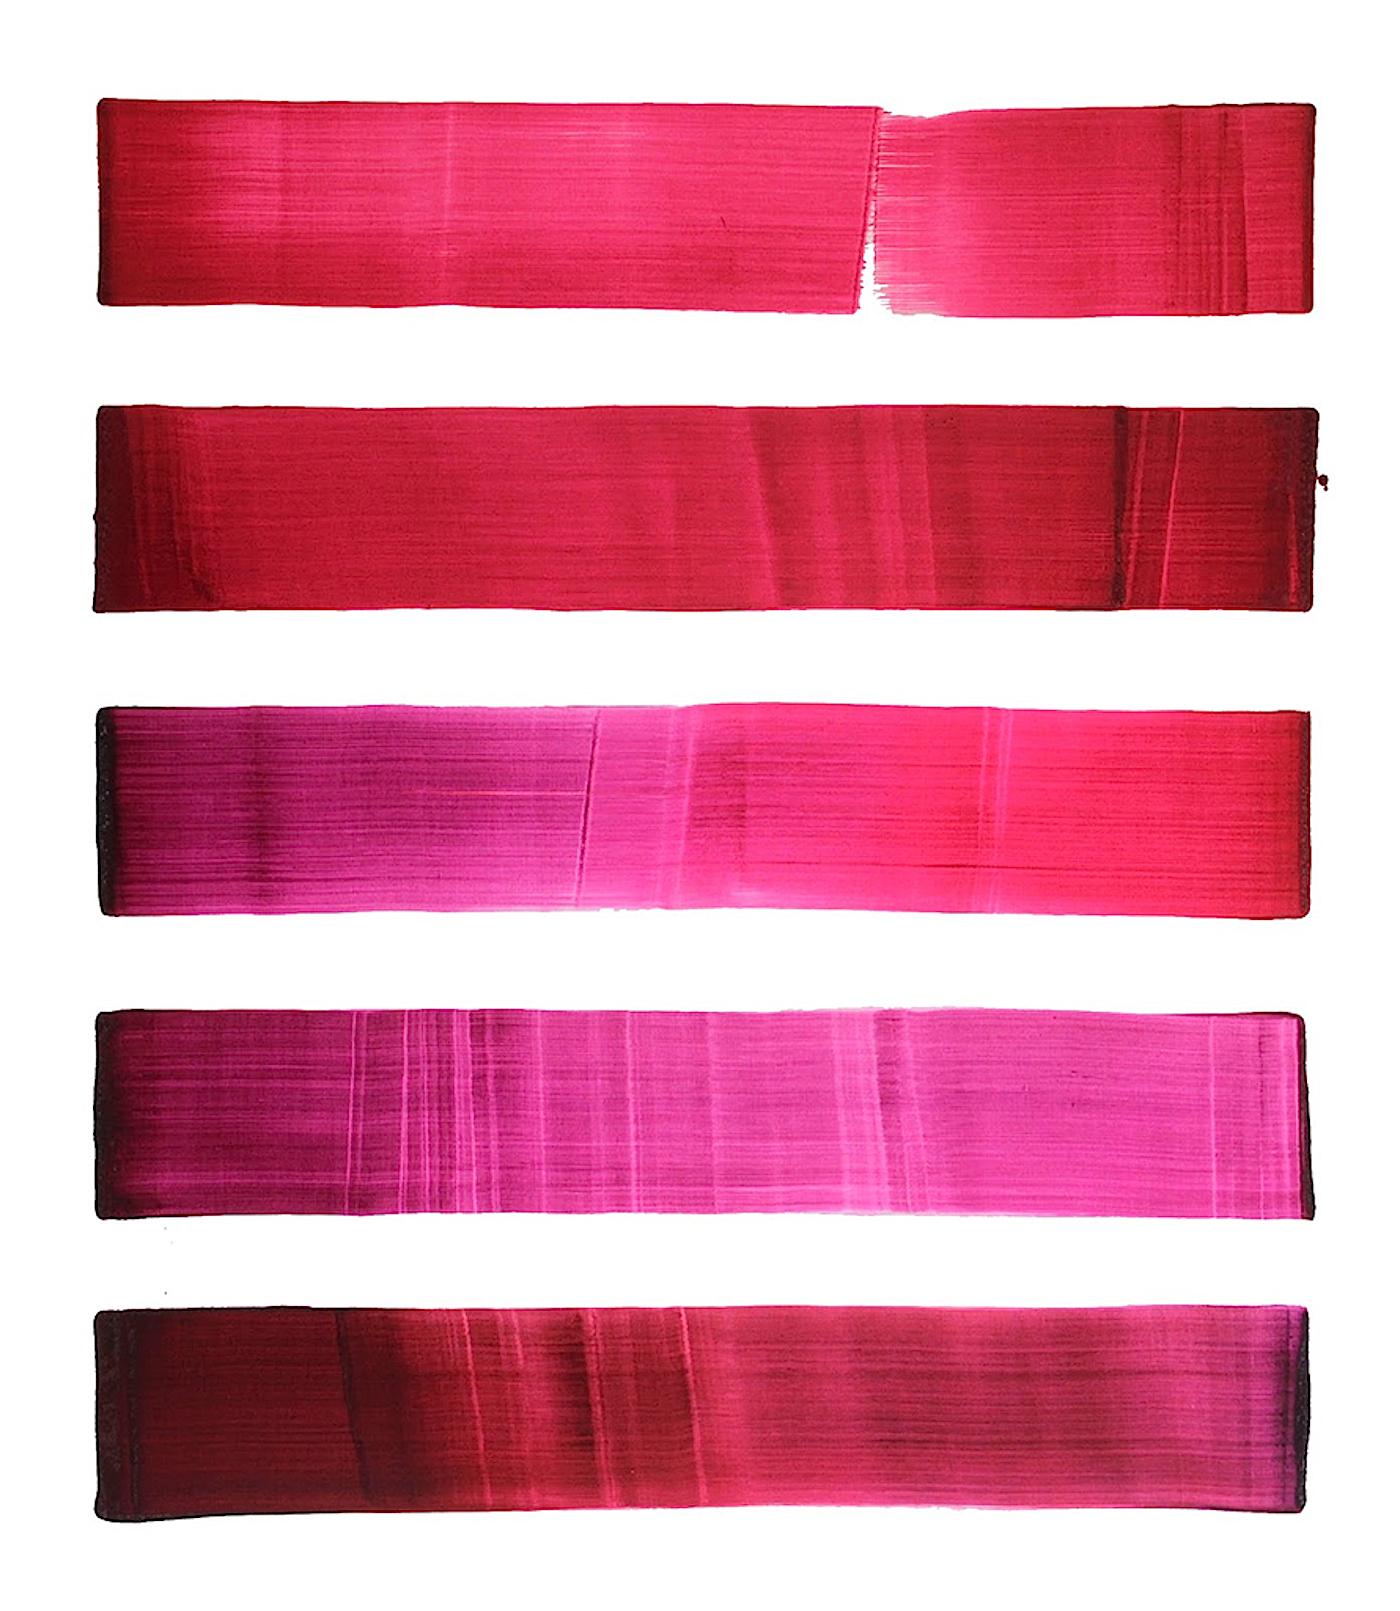 Dopaminum 6 -  Large Format, Minimalistic Conceptual Oil Painting, Color Field  